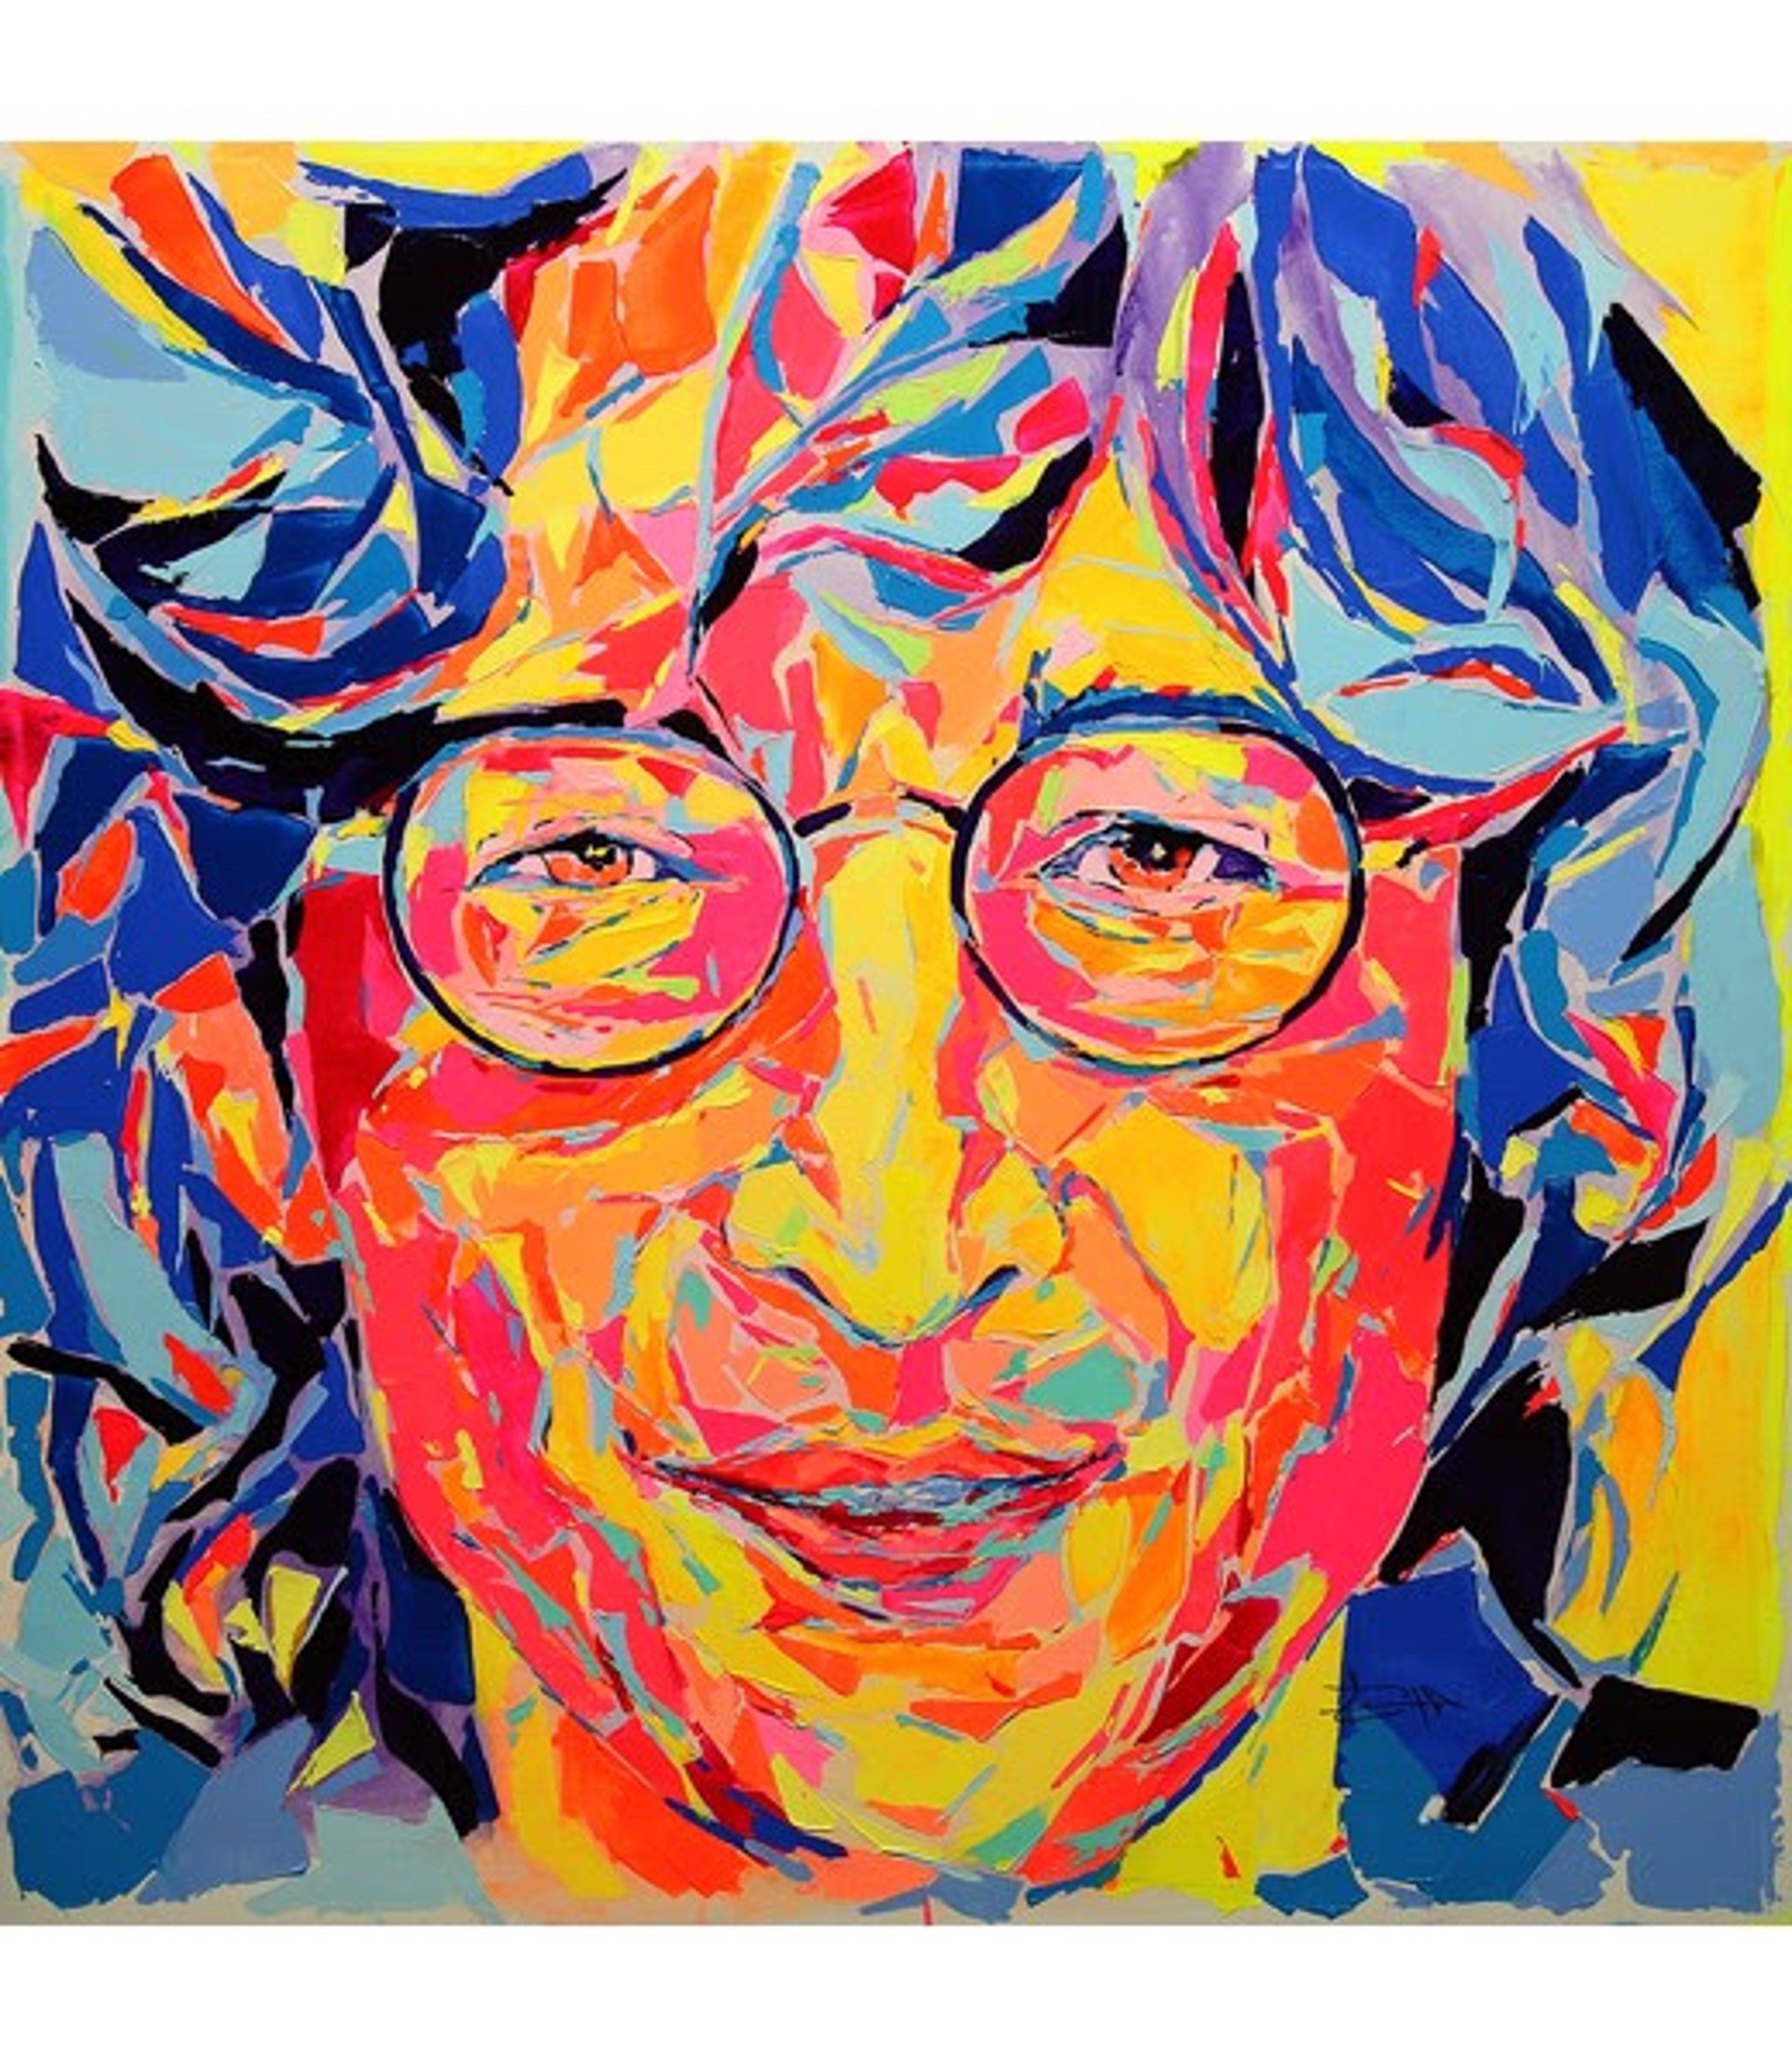 John Lennon by Federico López Córcoles